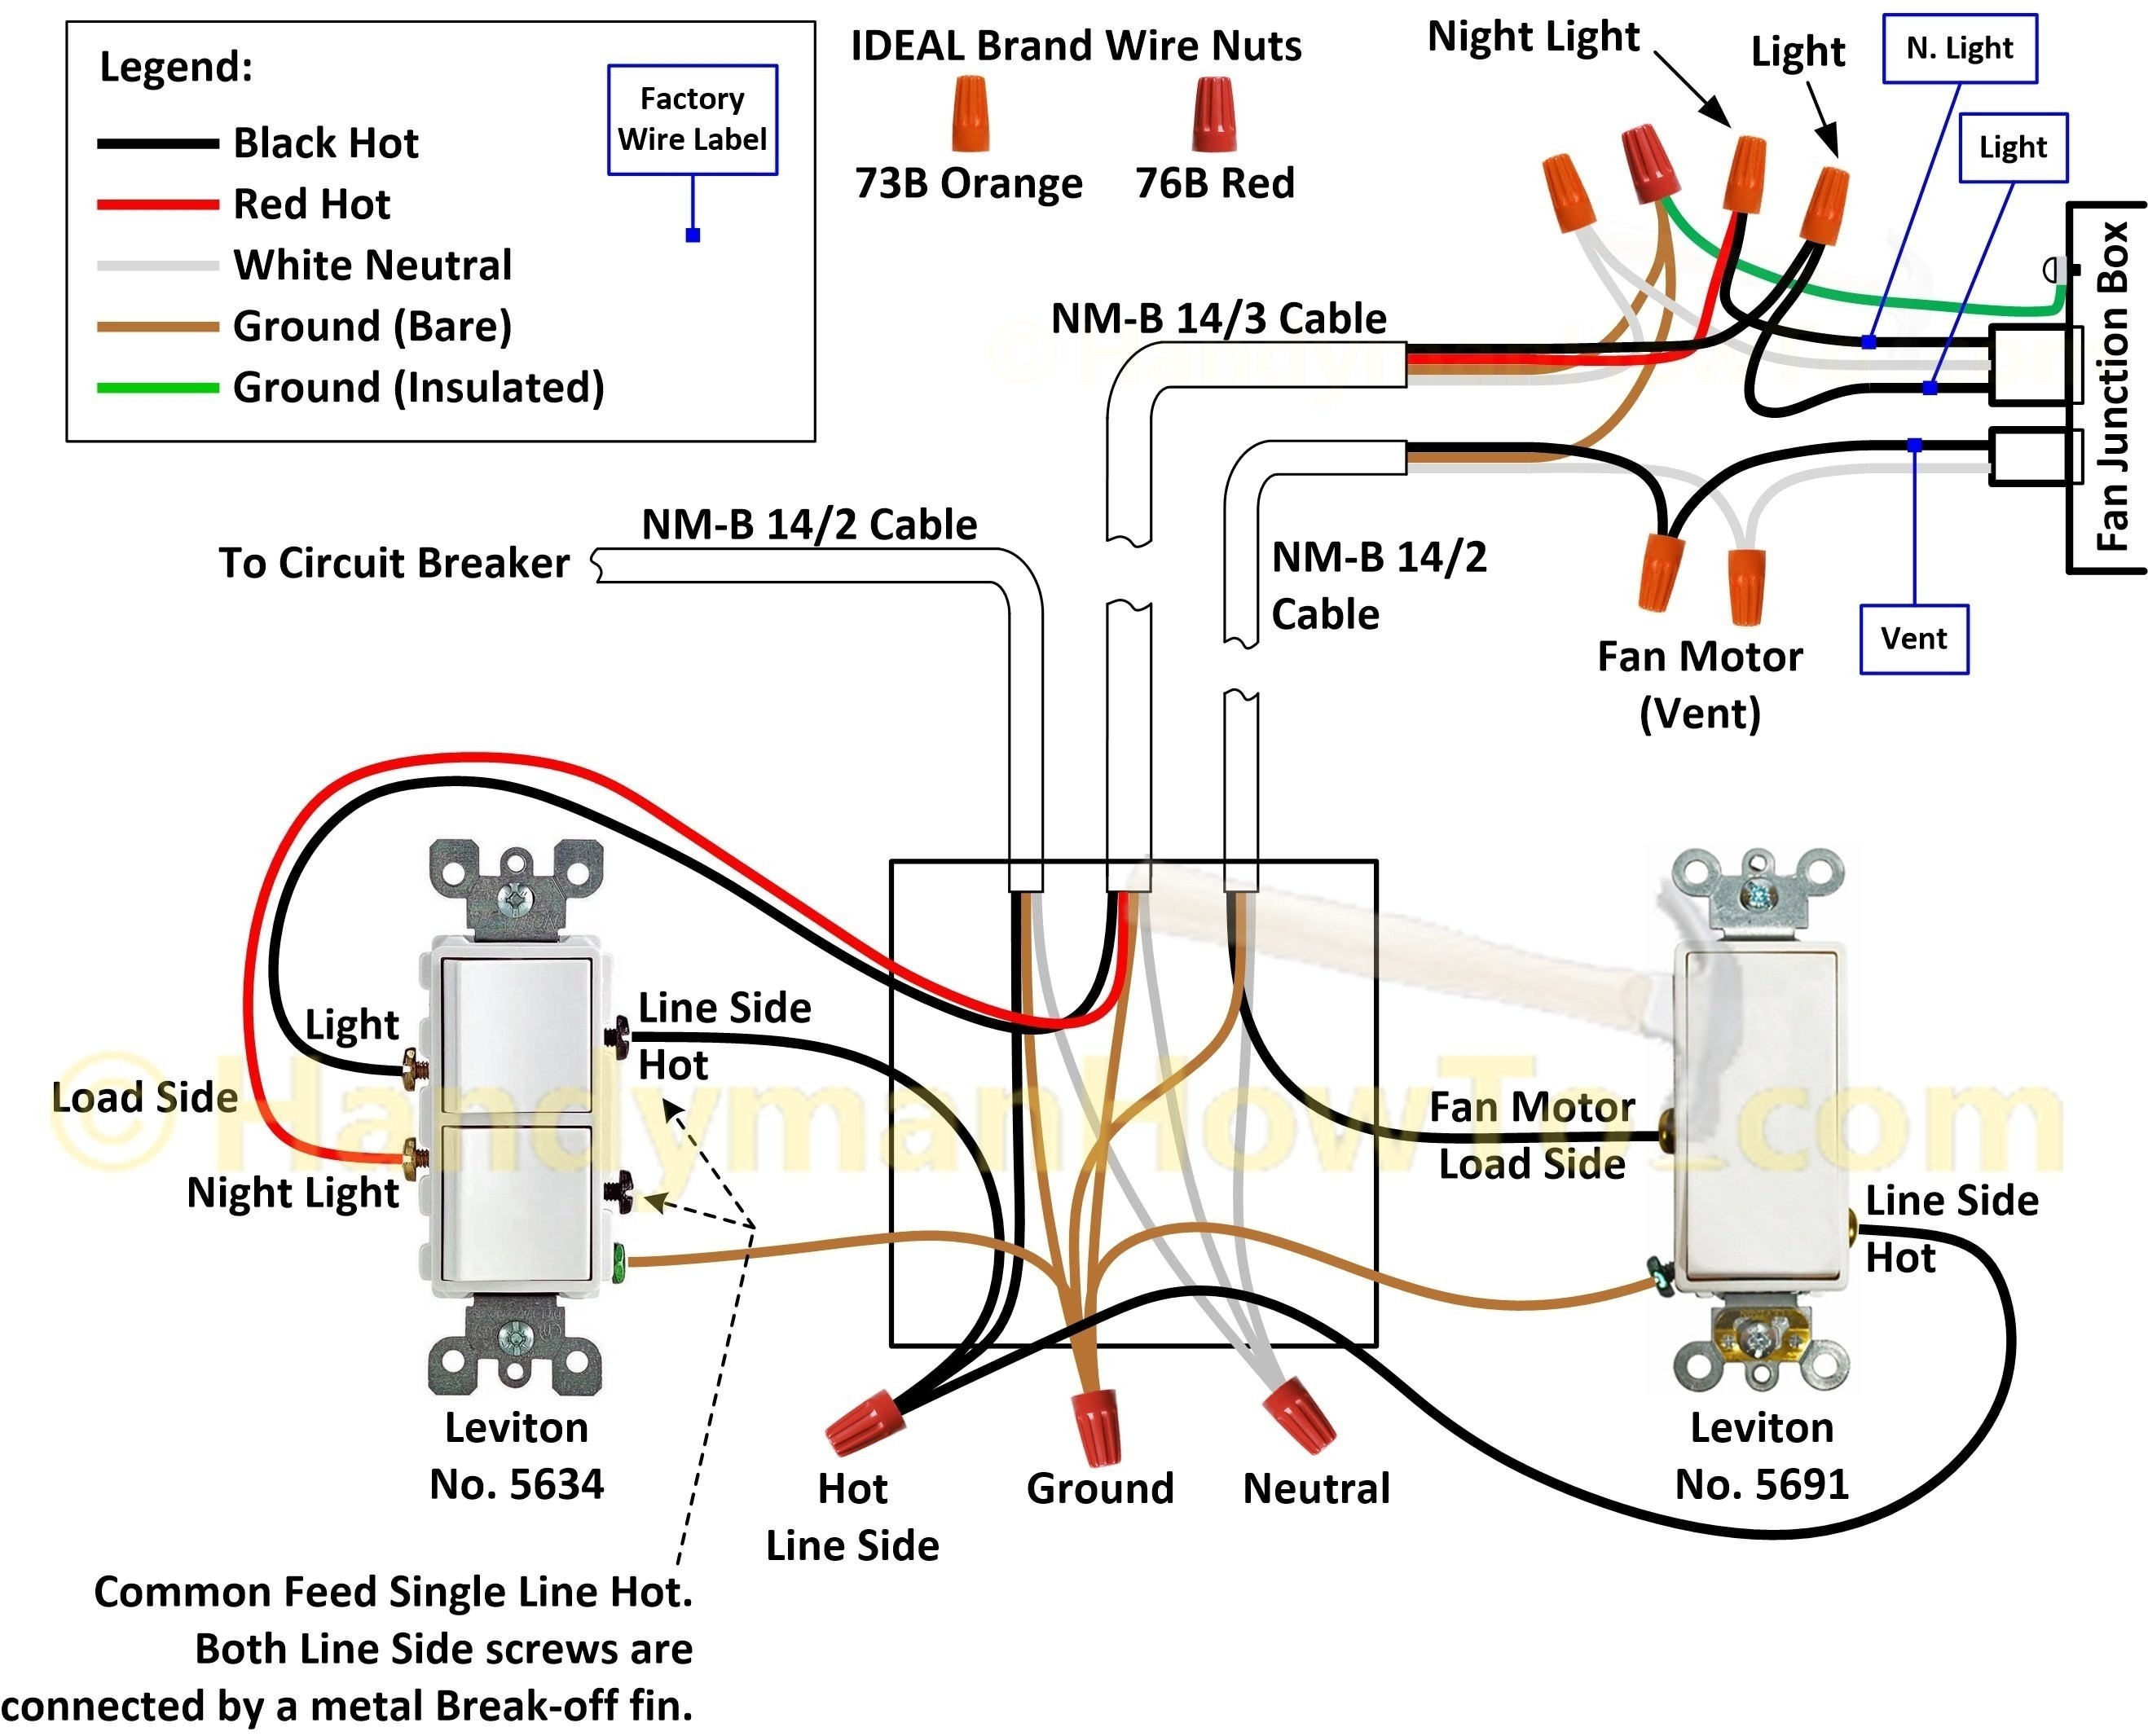 Electrical Wiring Diagrams Example Wiring Diagram Lighting Circuit Valid Hardware Diagram 0d